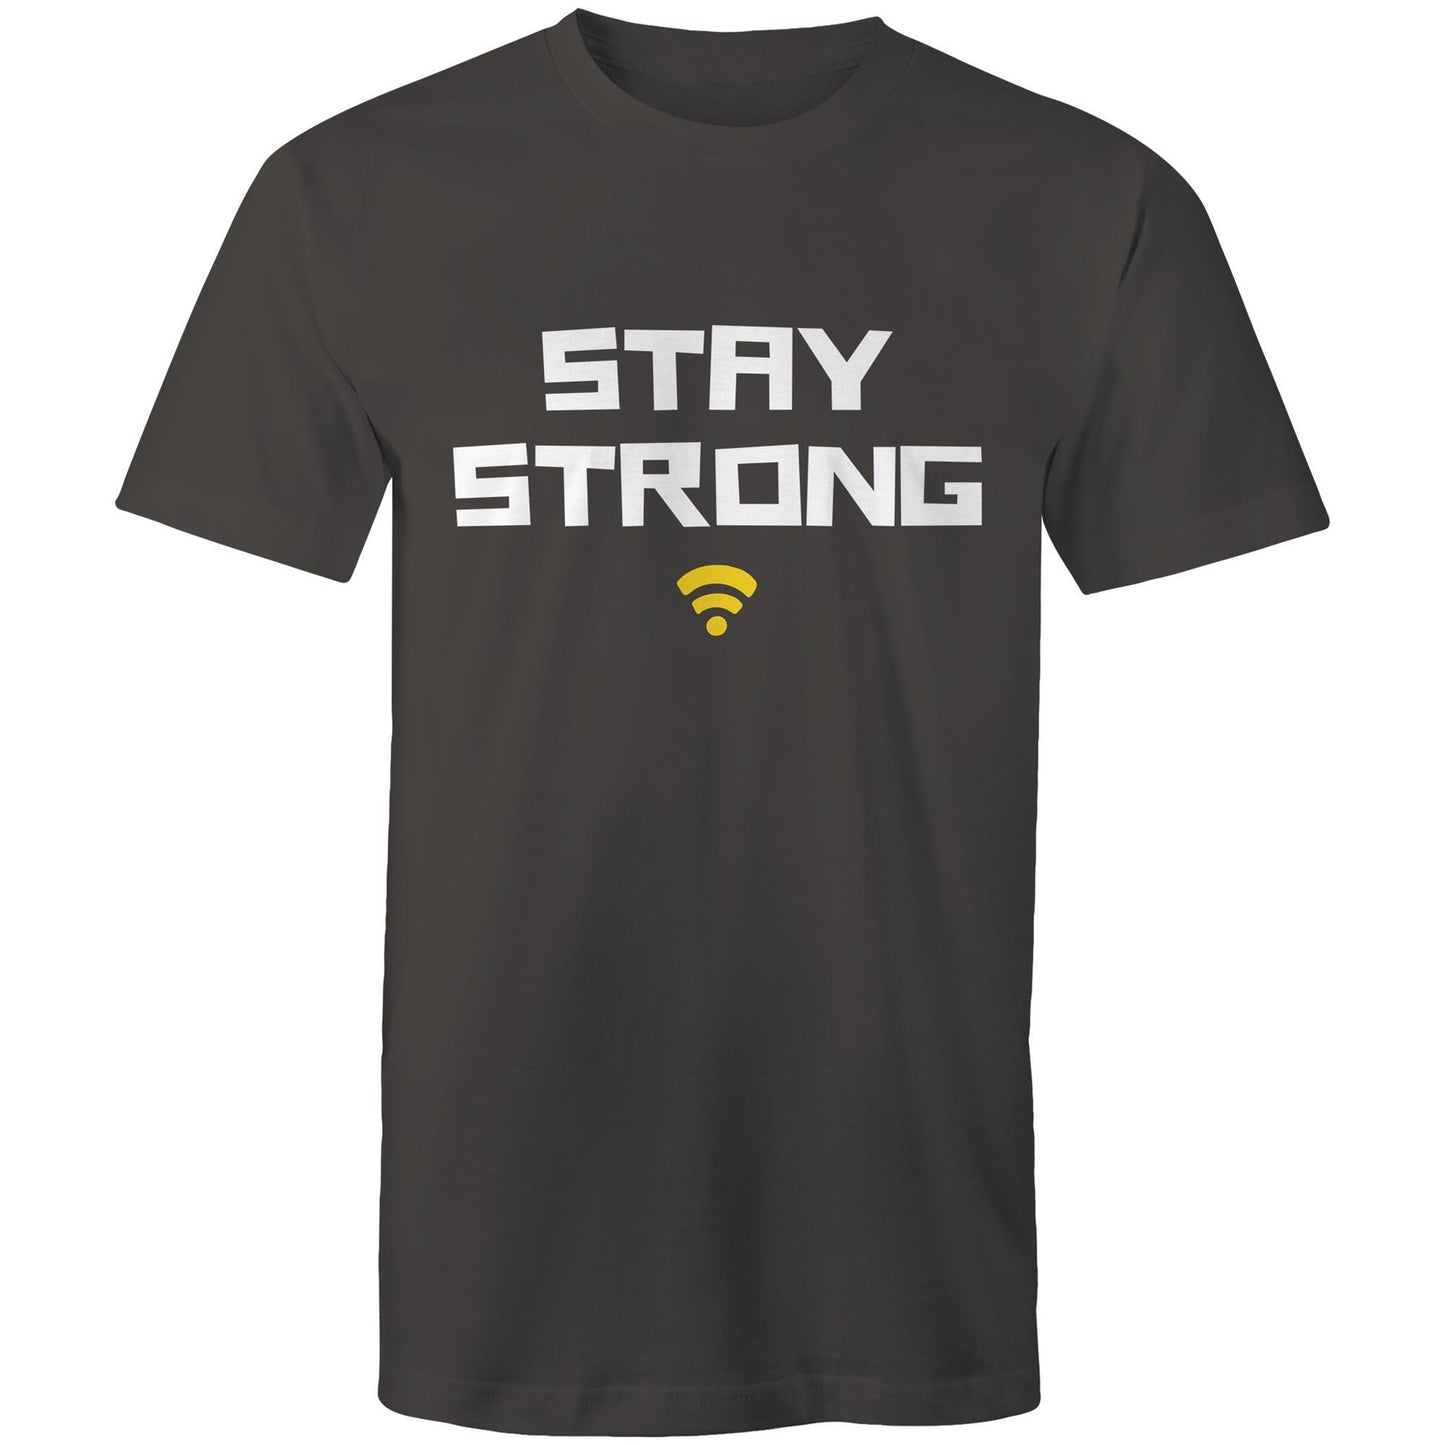 Stay Strong - Mens T-Shirt Charcoal Mens T-shirt Motivation Tech